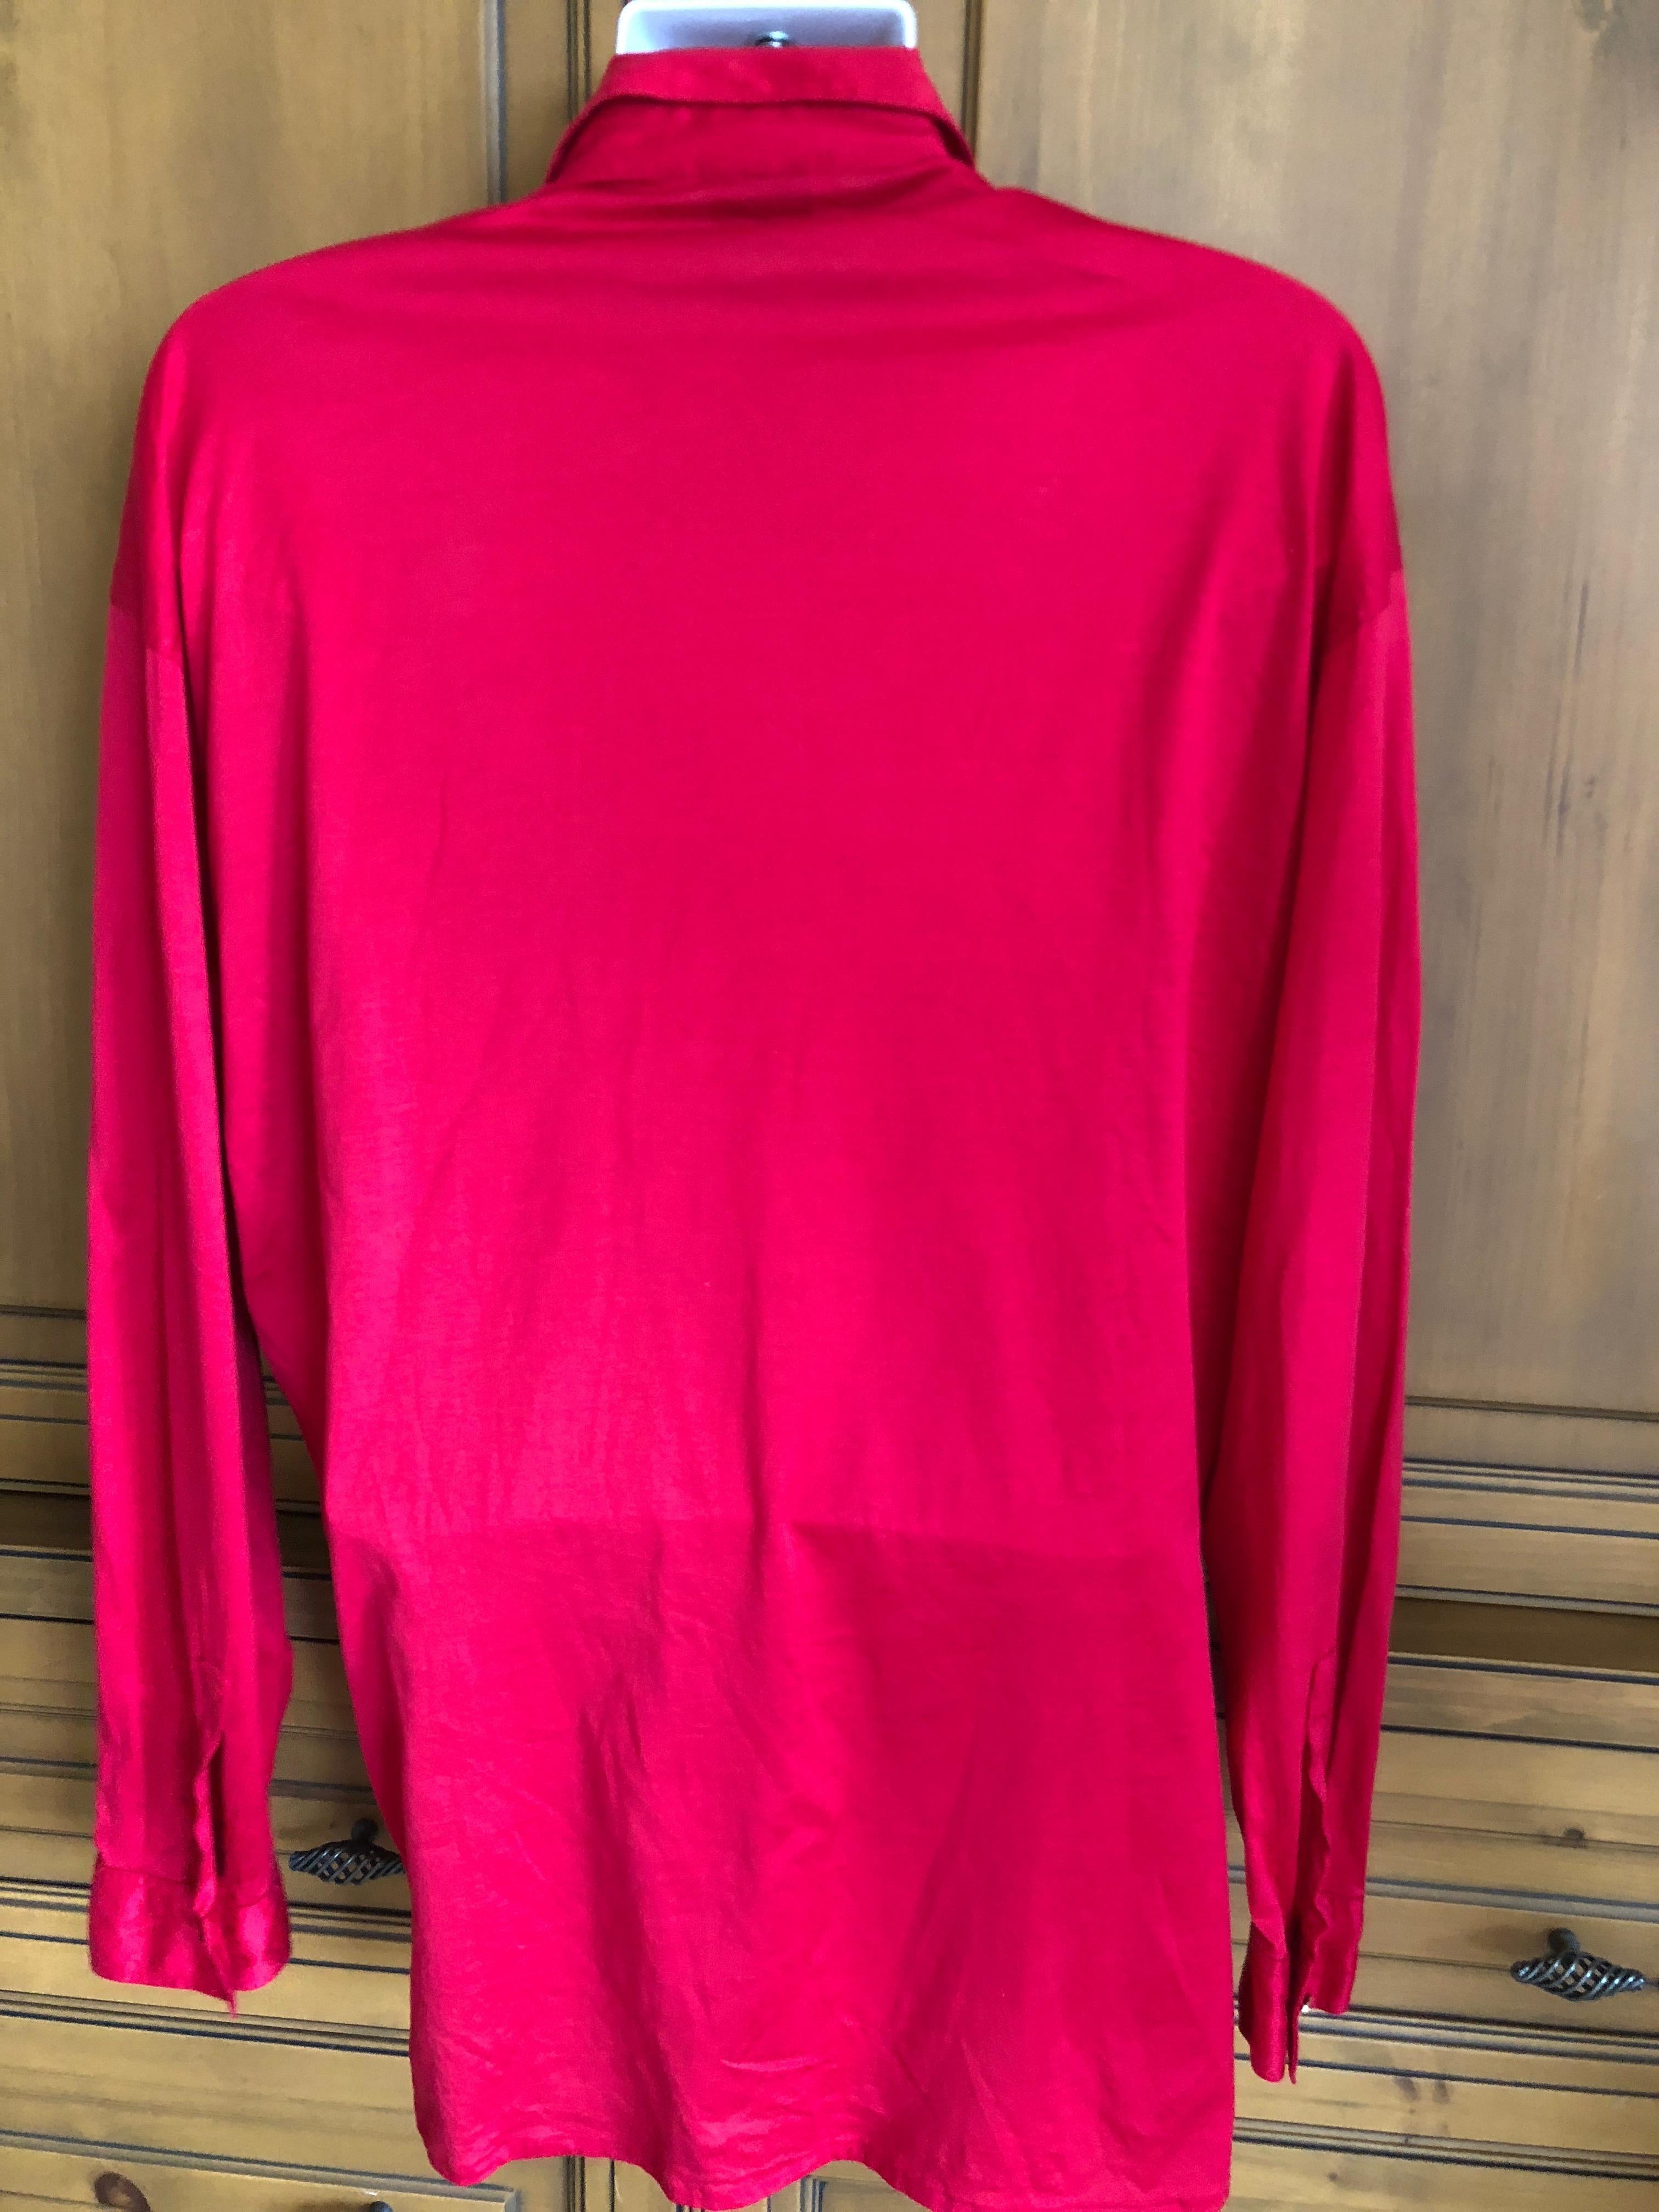 Versus Gianni Versace Rare 1993 Red Sheer Mesh Men's Large Shirt  For Sale 3